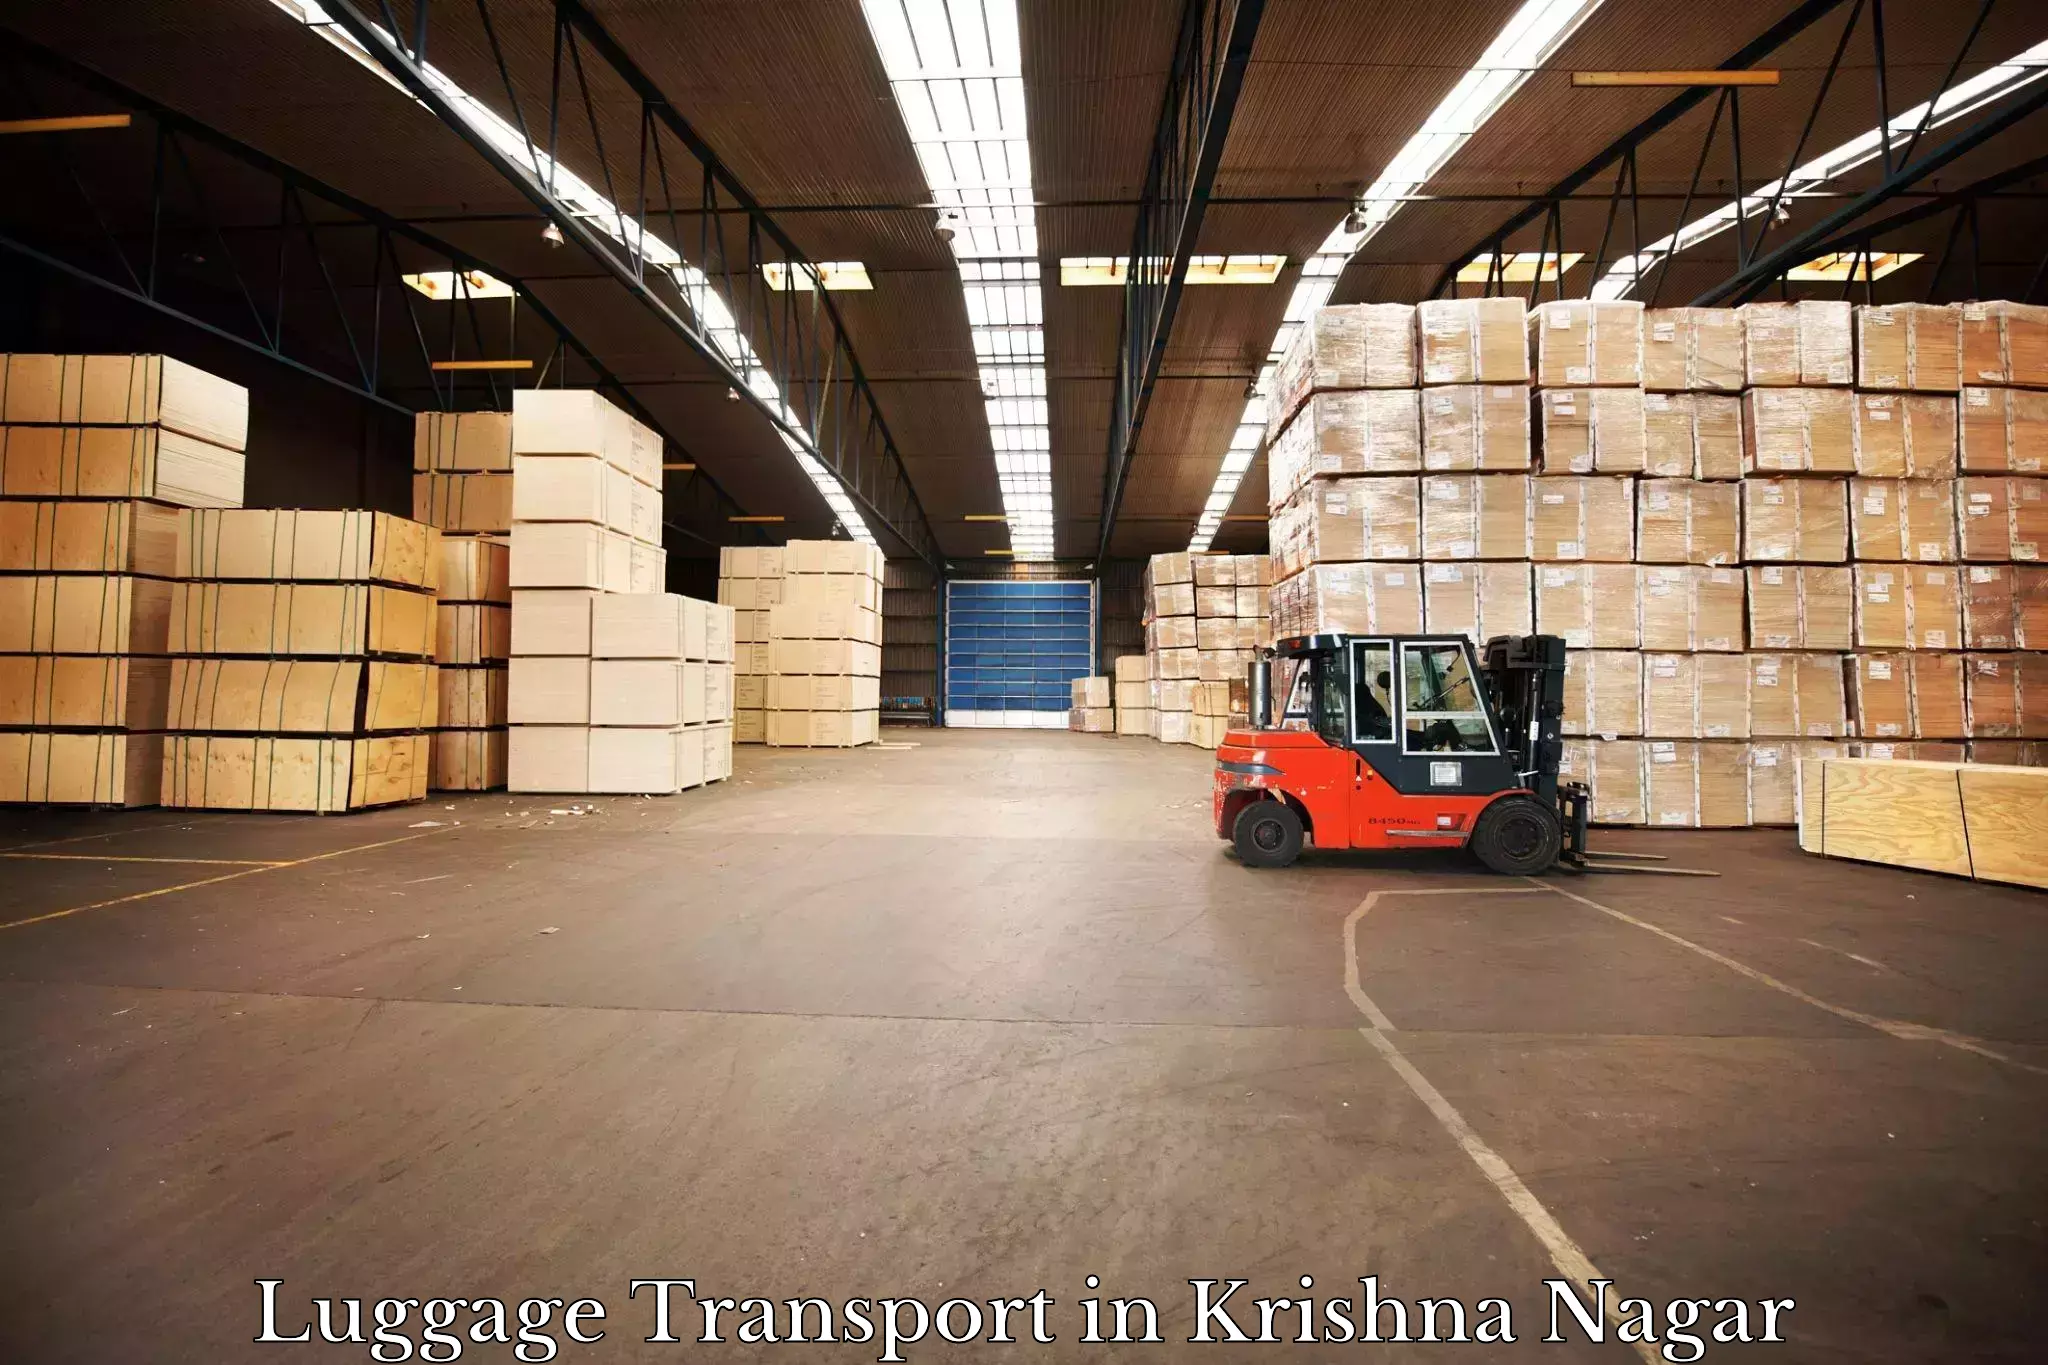 Luggage delivery system in Krishna Nagar